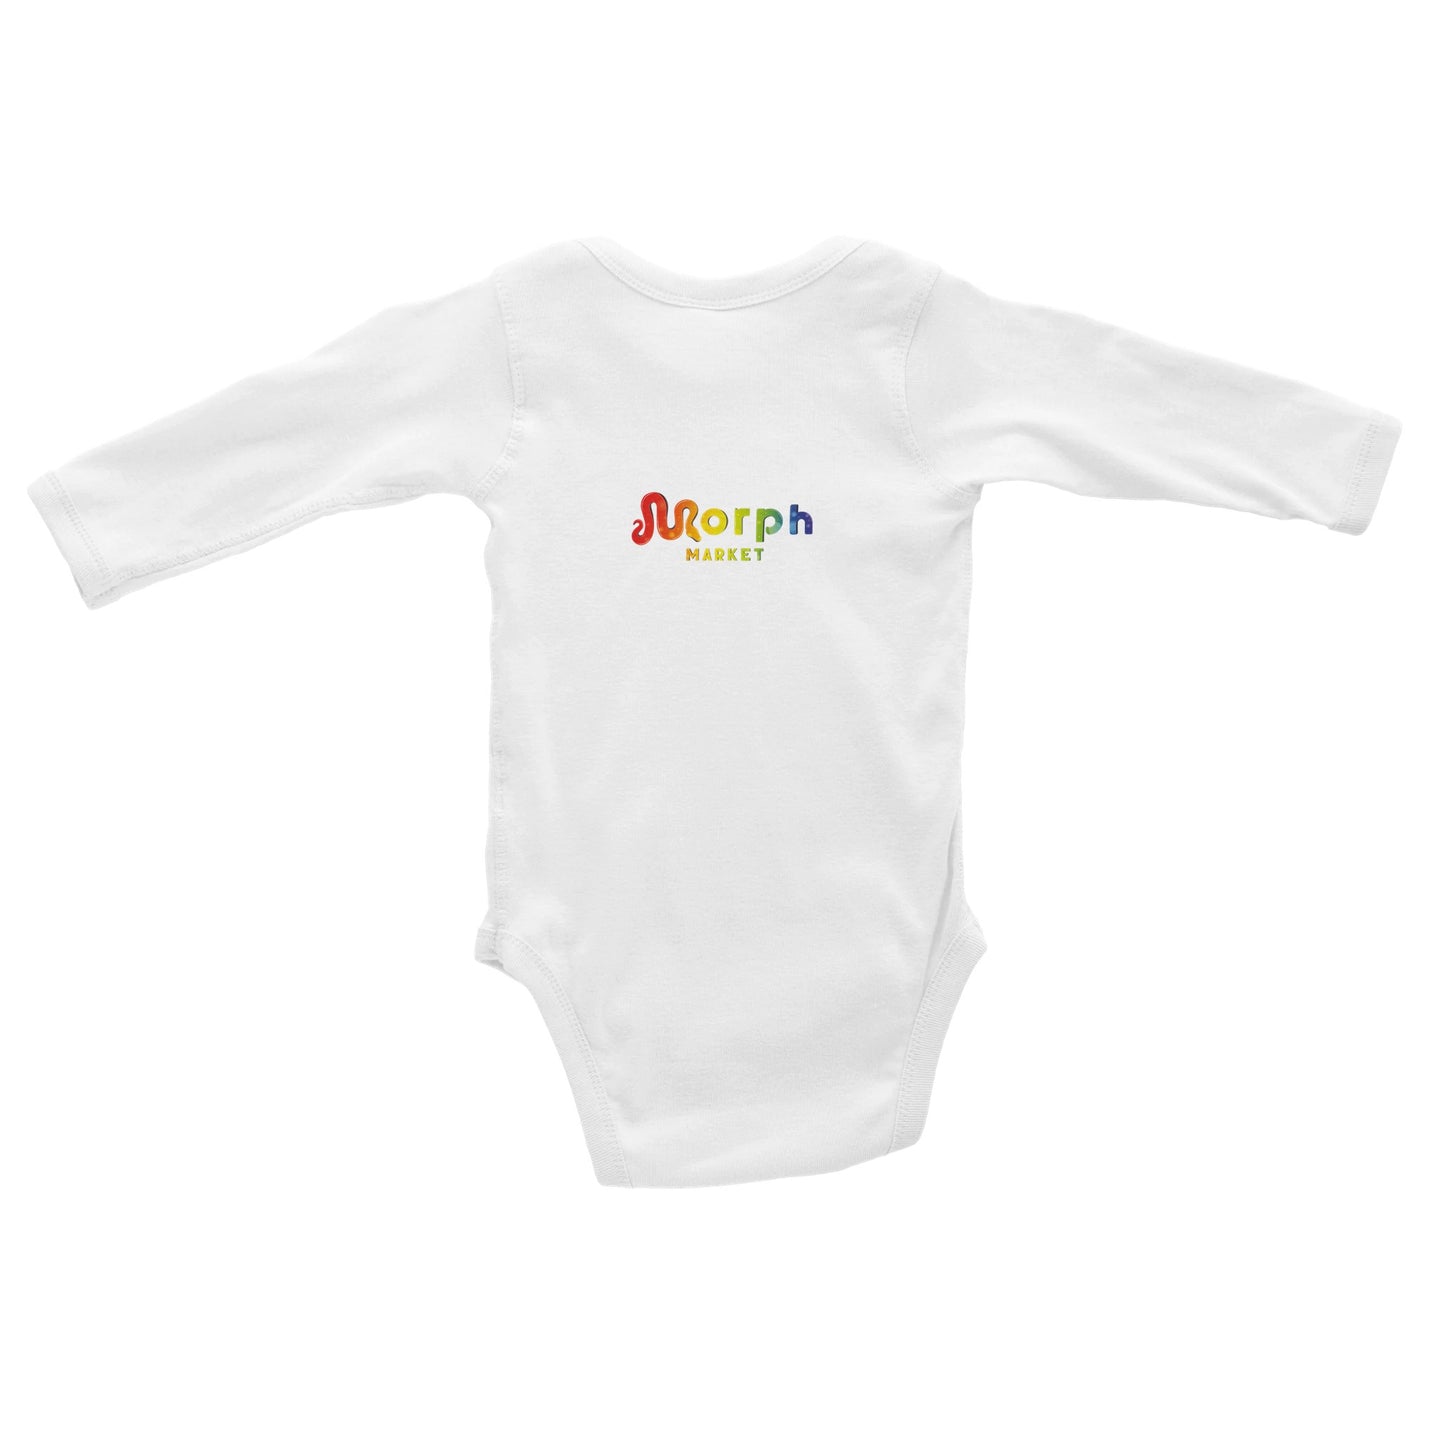 Morph Market (Rainbow Circles) - Classic Baby Long Sleeve Bodysuit